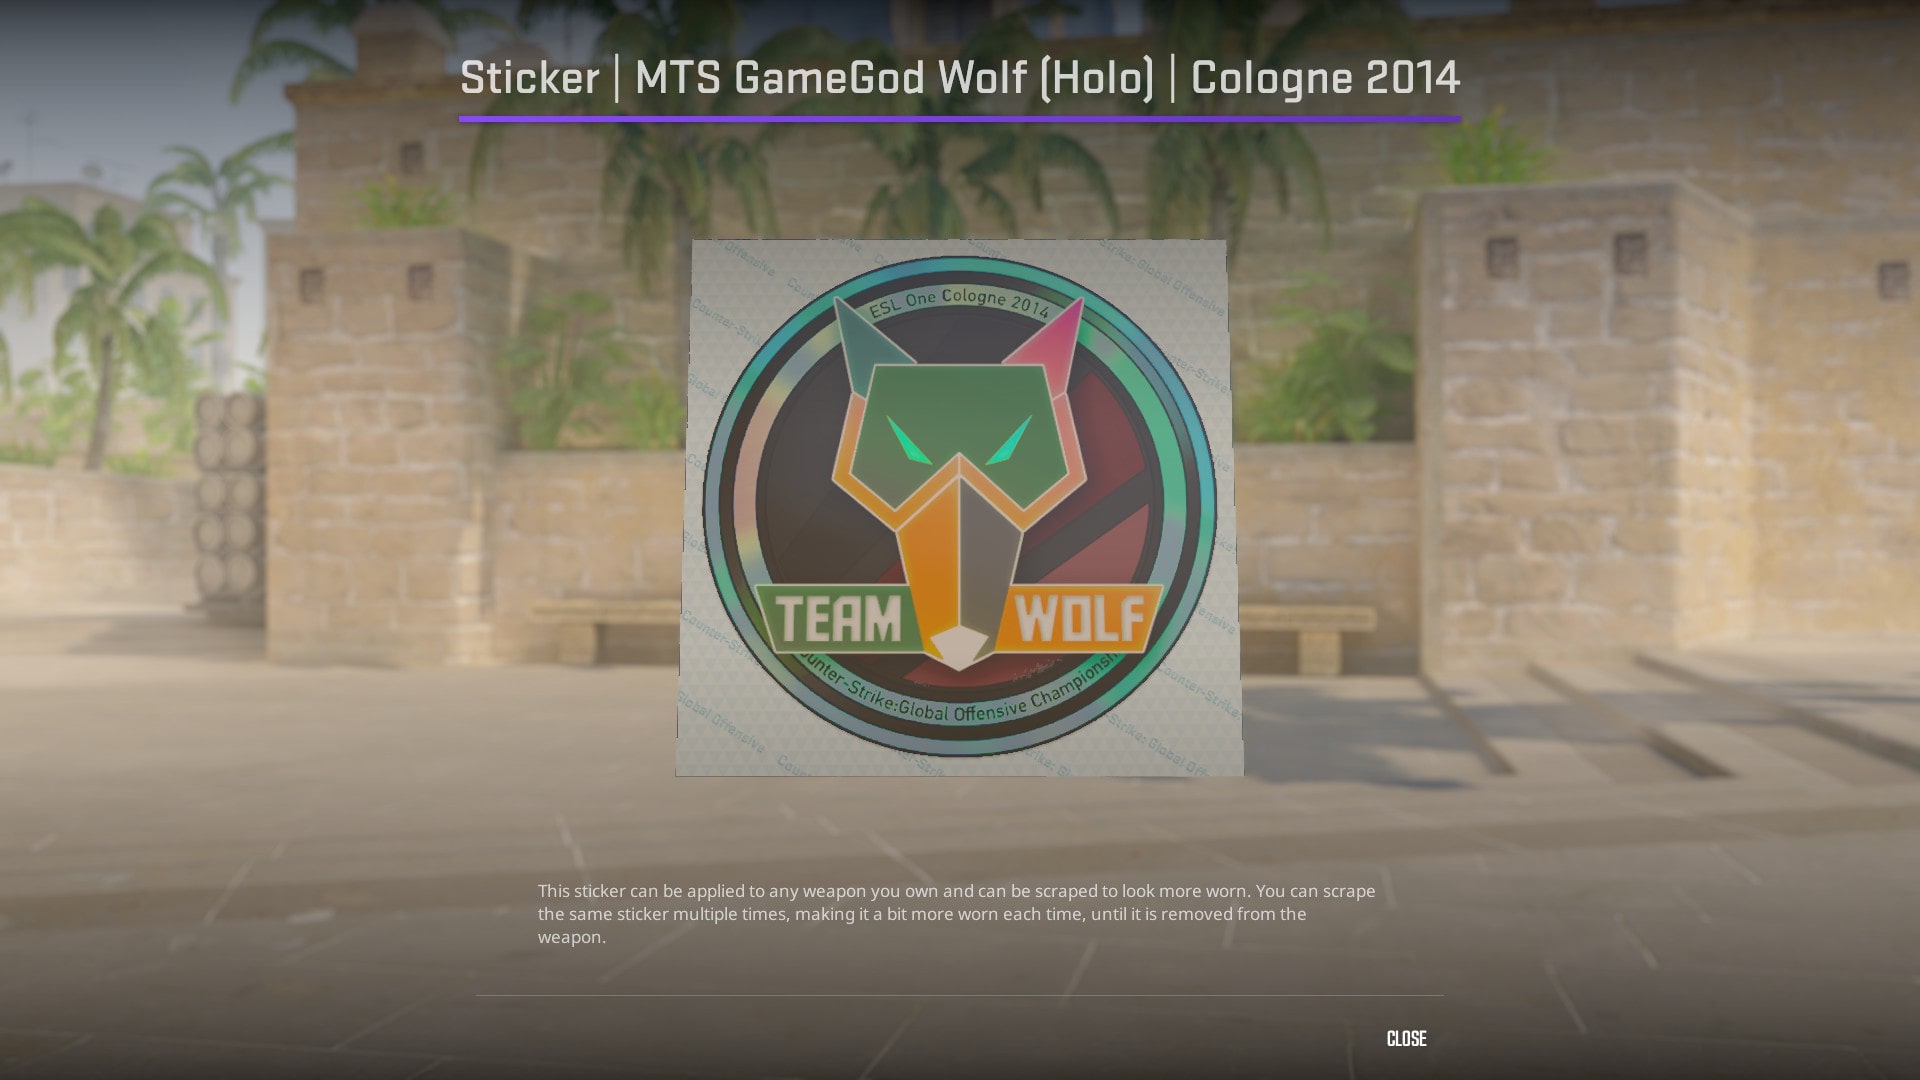 Cologne 2014 MTS GameGod Wolf (Holo)